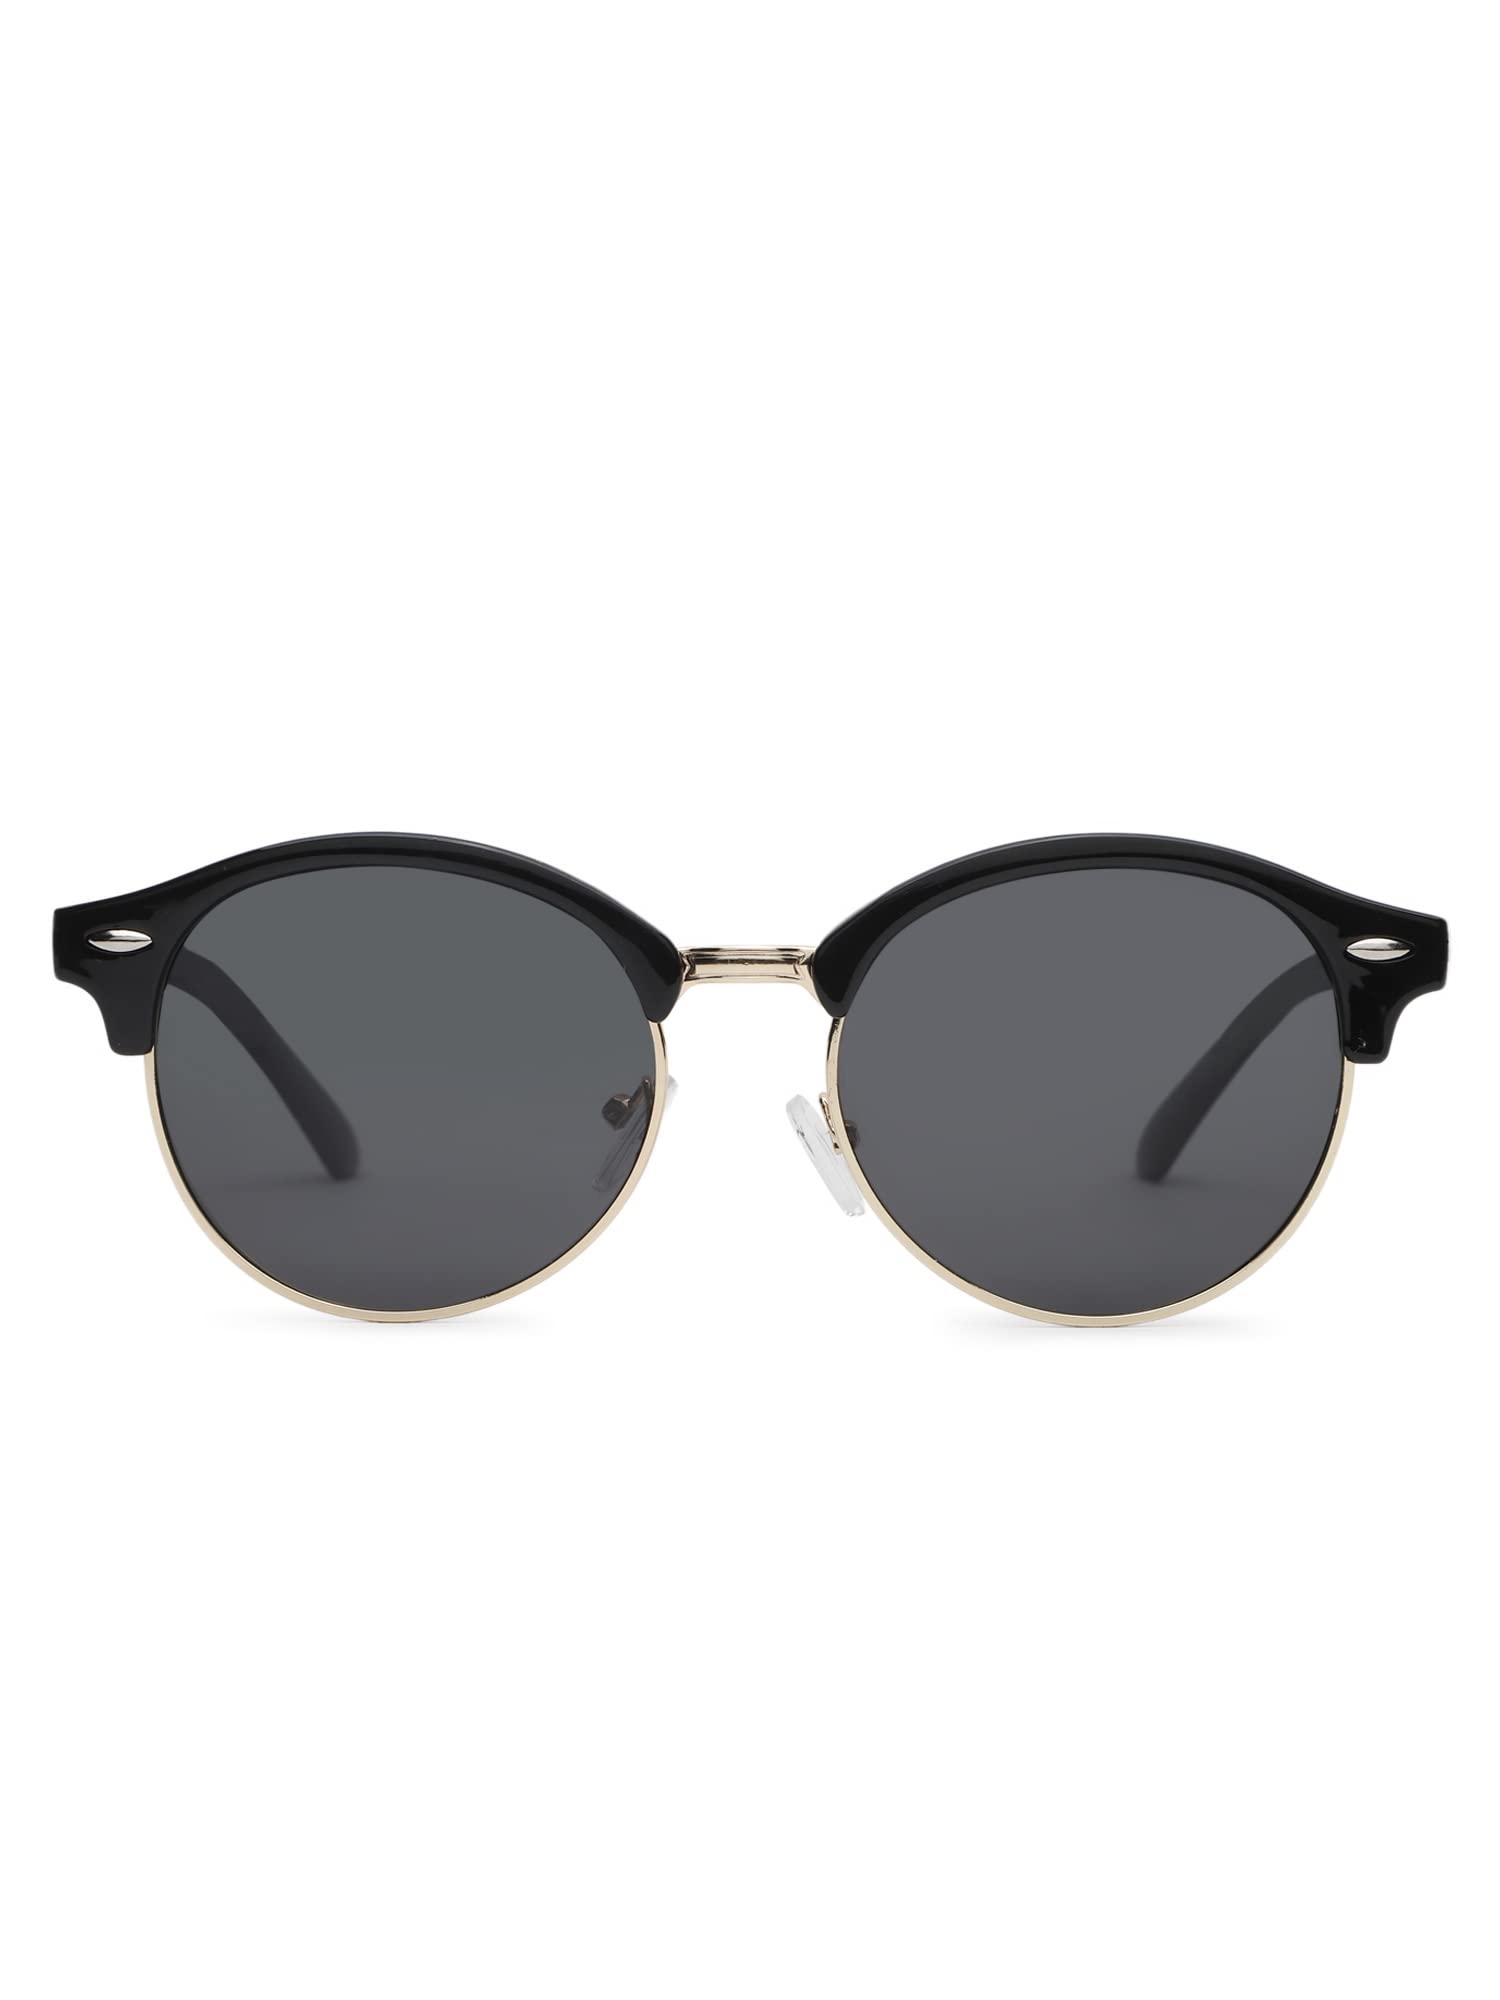 Intellilens Round UV Protection Polarized Sunglasses For Men & Women